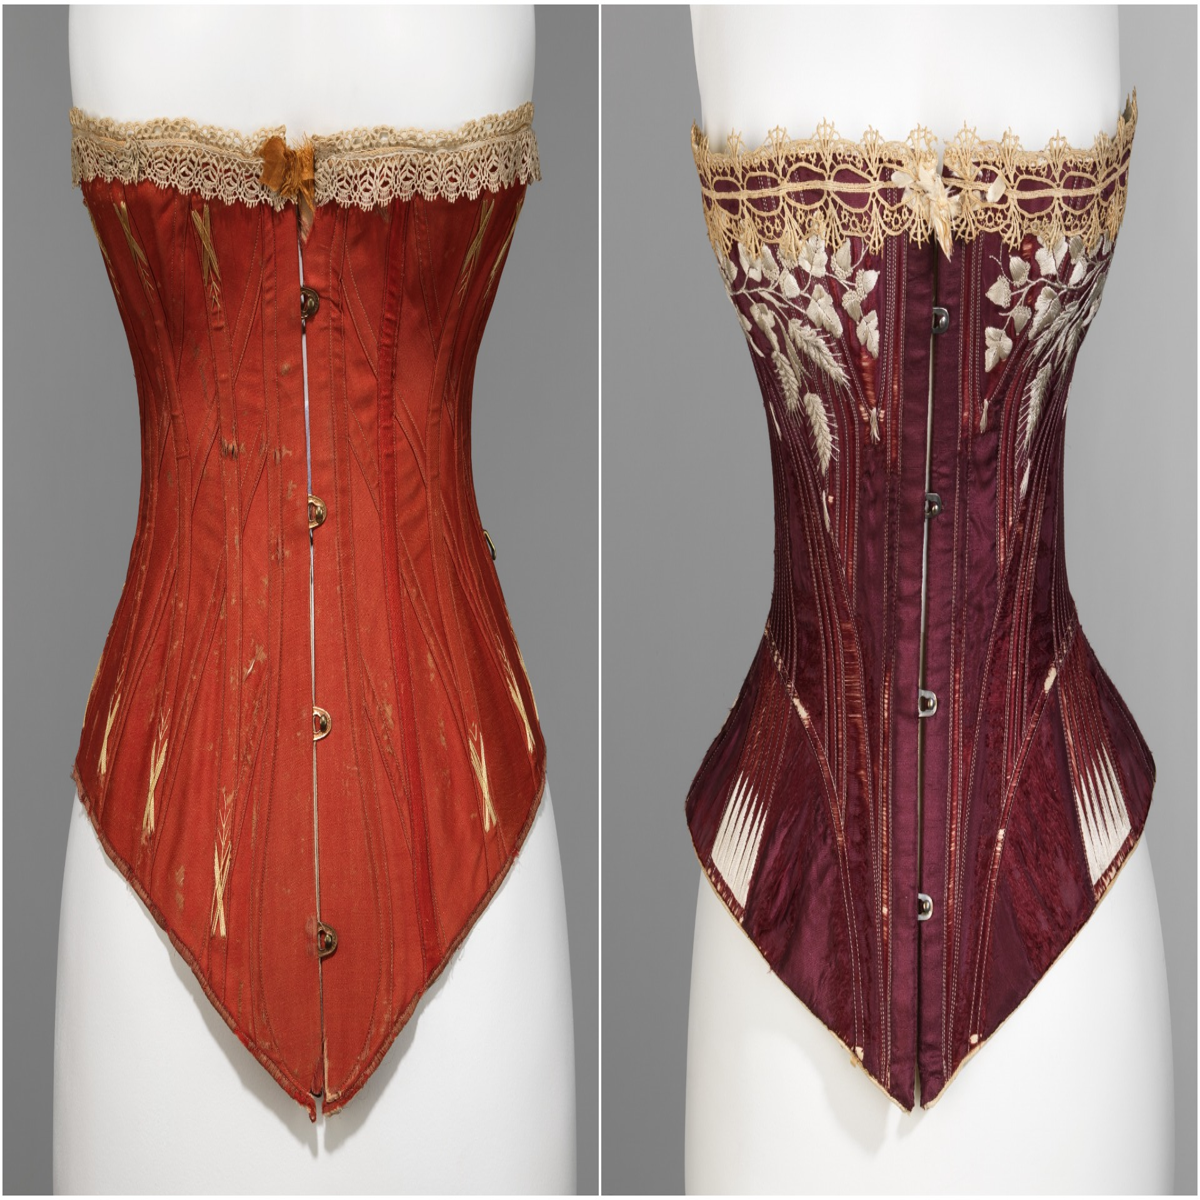 https://assetsio.reedpopcdn.com/corset%20headline.jpg?width=1200&height=1200&fit=crop&quality=100&format=png&enable=upscale&auto=webp